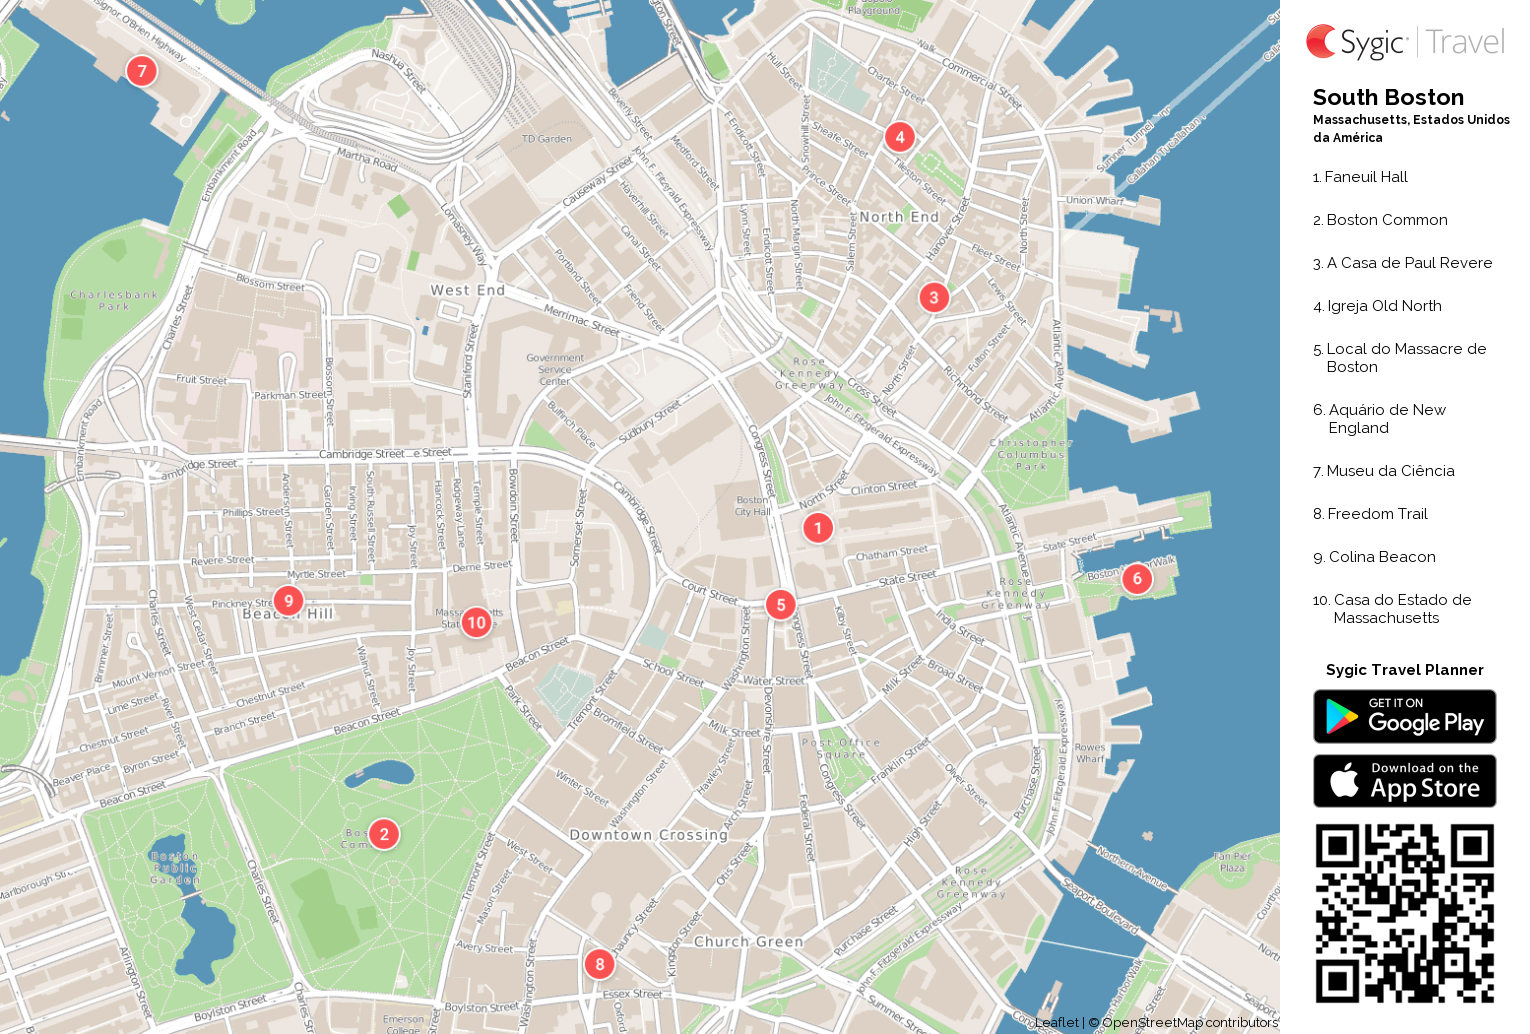 south-boston-mapa-turistico-em-pdf